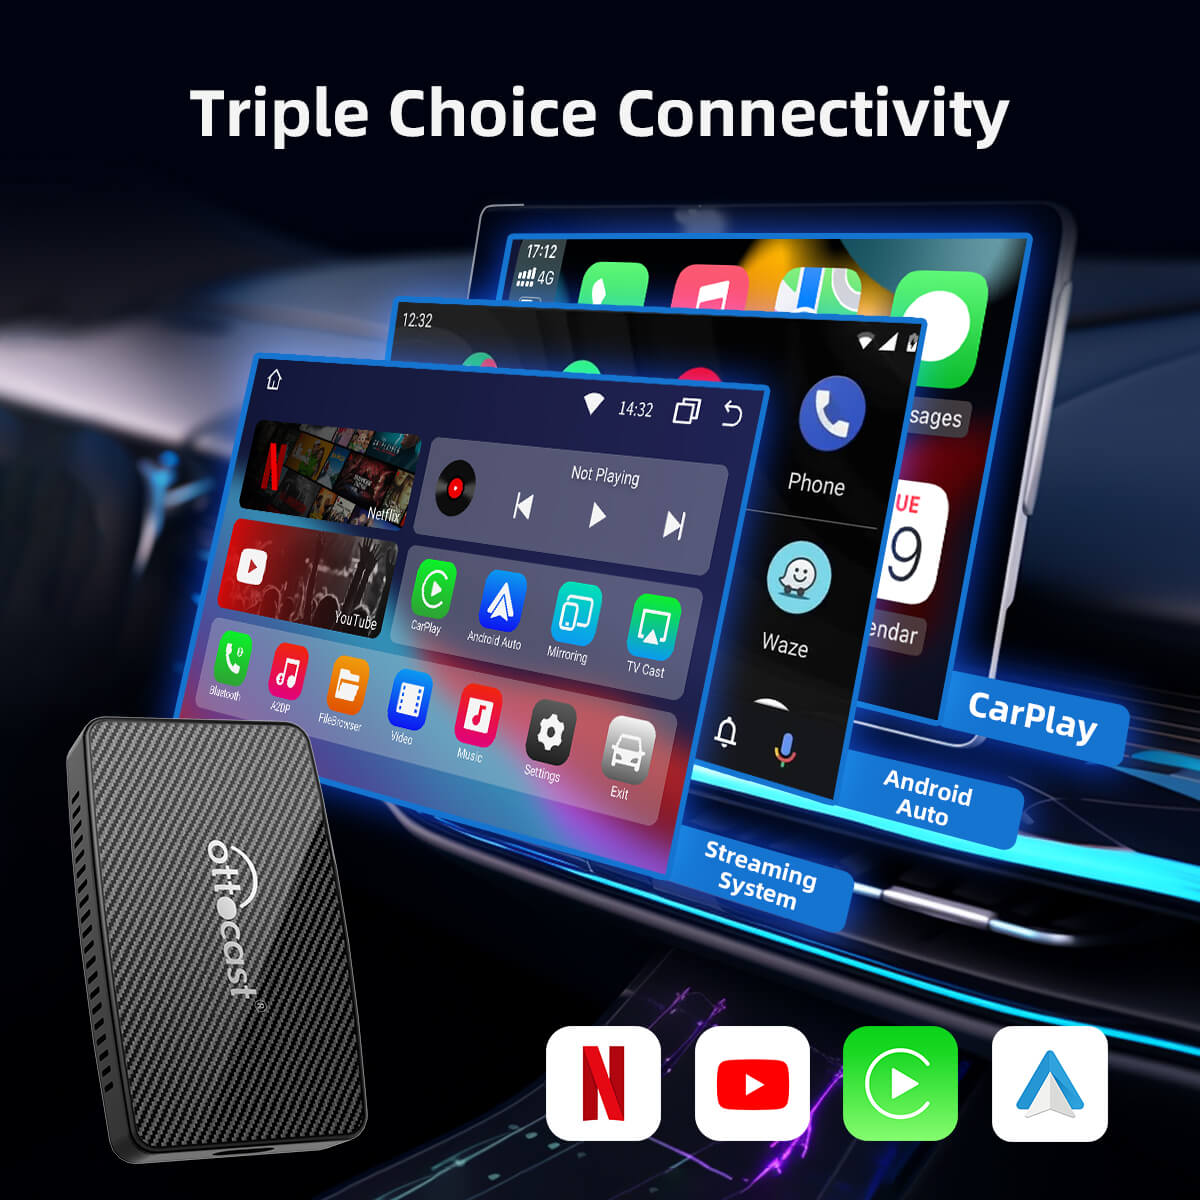 Ottocast Play2Video Smart Wireless CarPlay Ai Box, Car Accessories